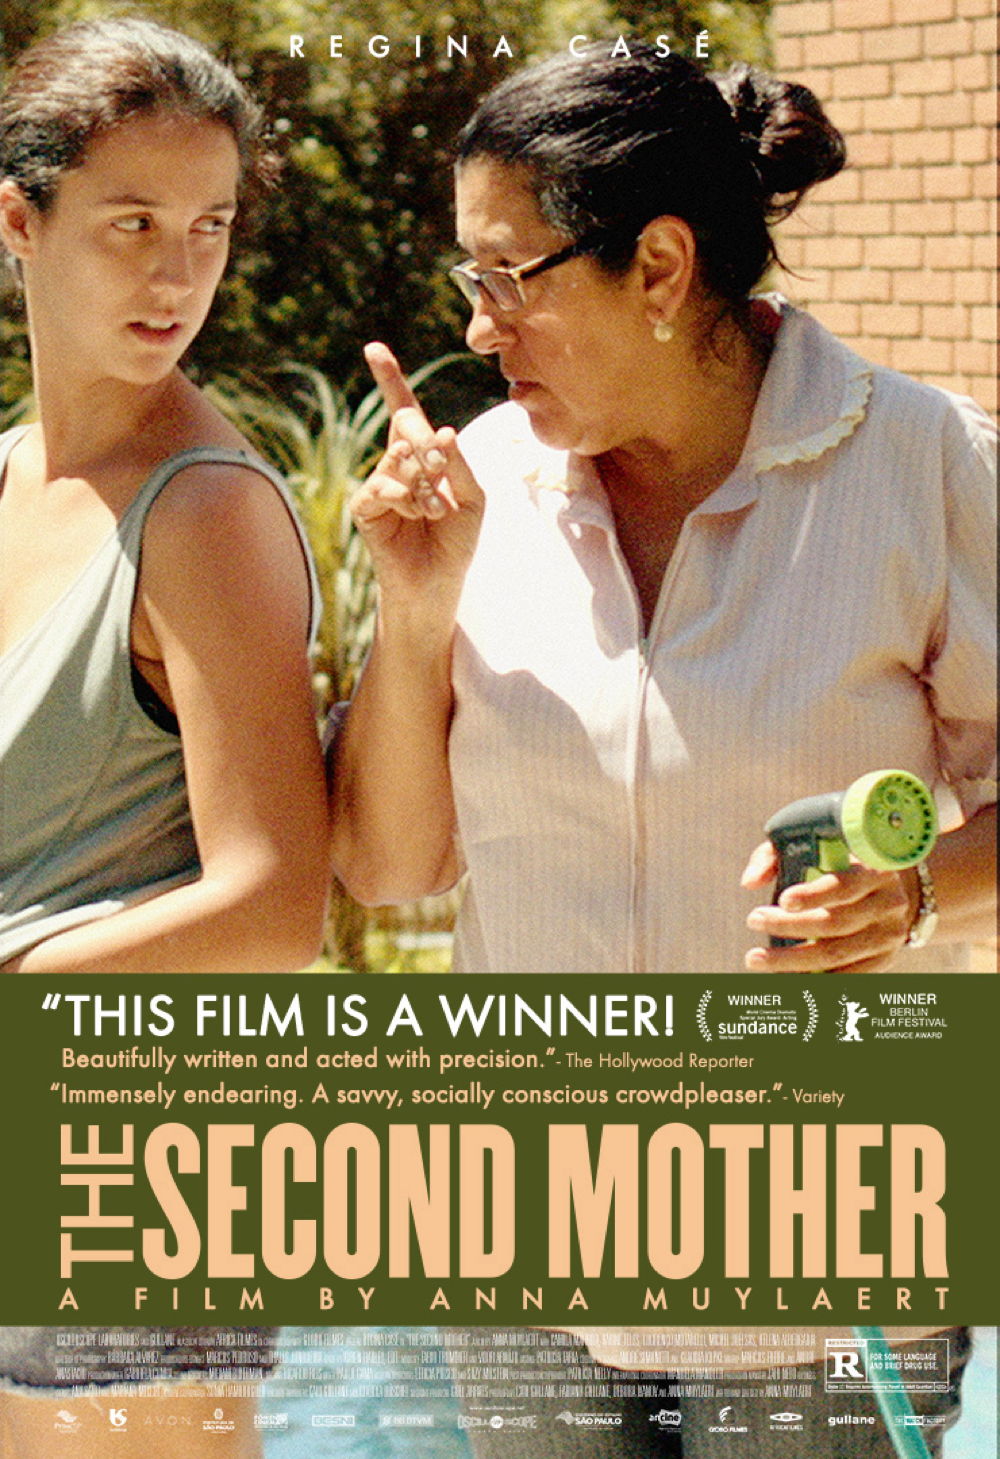 moviegoer.com: THE SECOND MOTHER movie poster